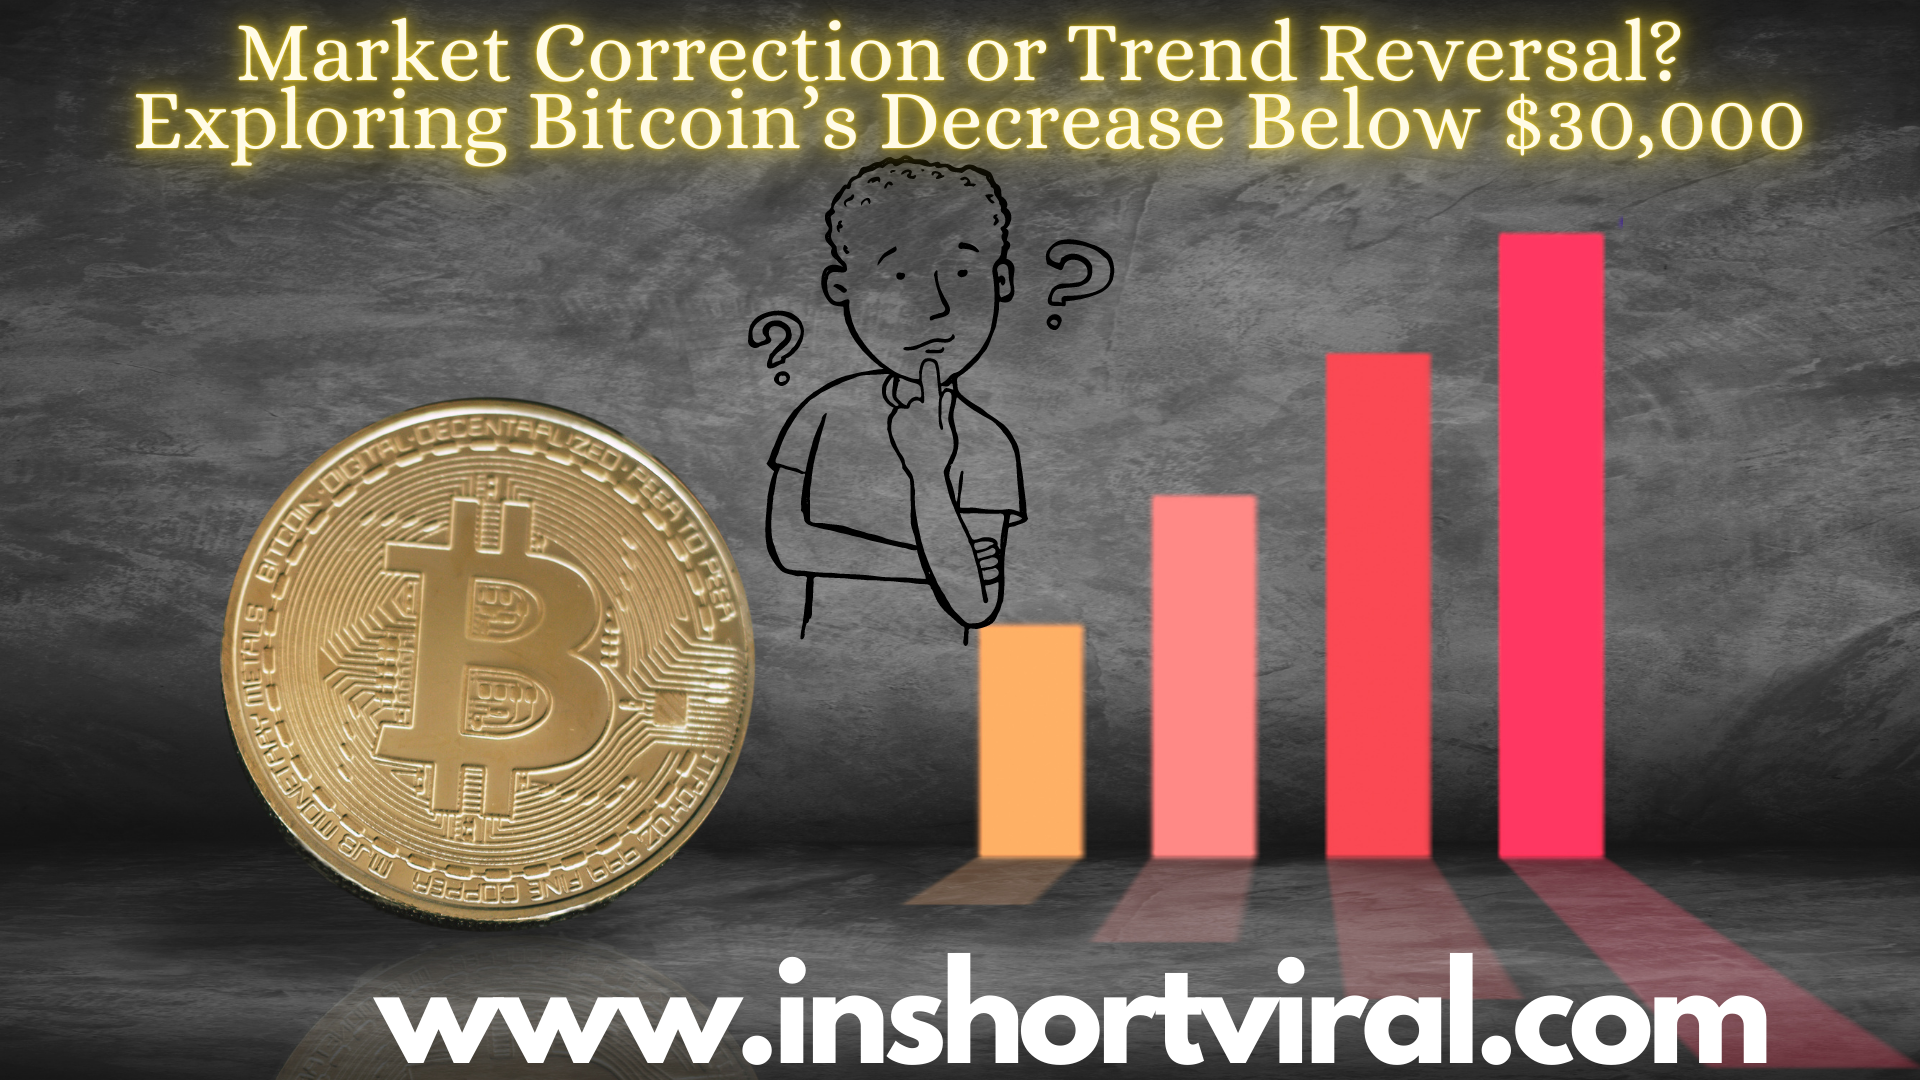 Market Correction or Trend Reversal? Exploring Bitcoin’s Decrease Below $30k,000